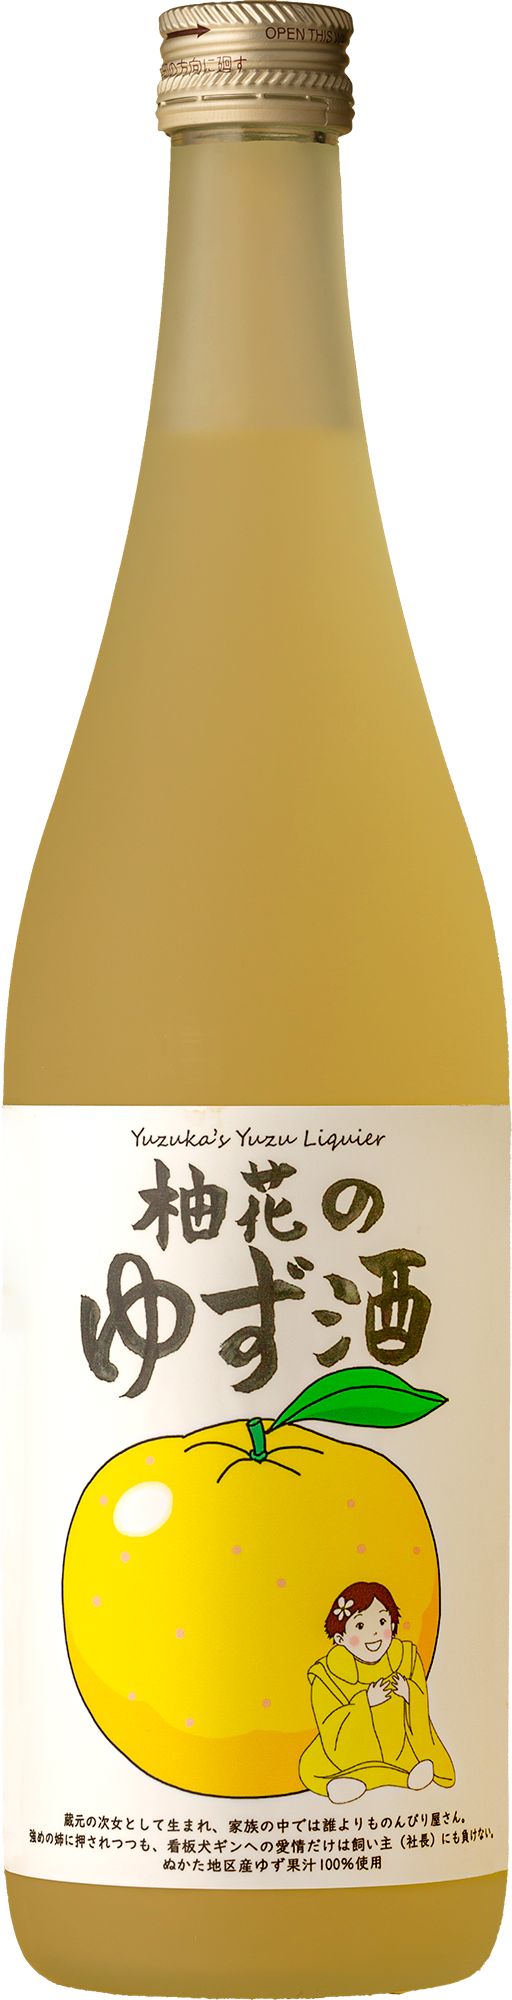 Kounotsukasa - Yuzushu 720mL Not Wine